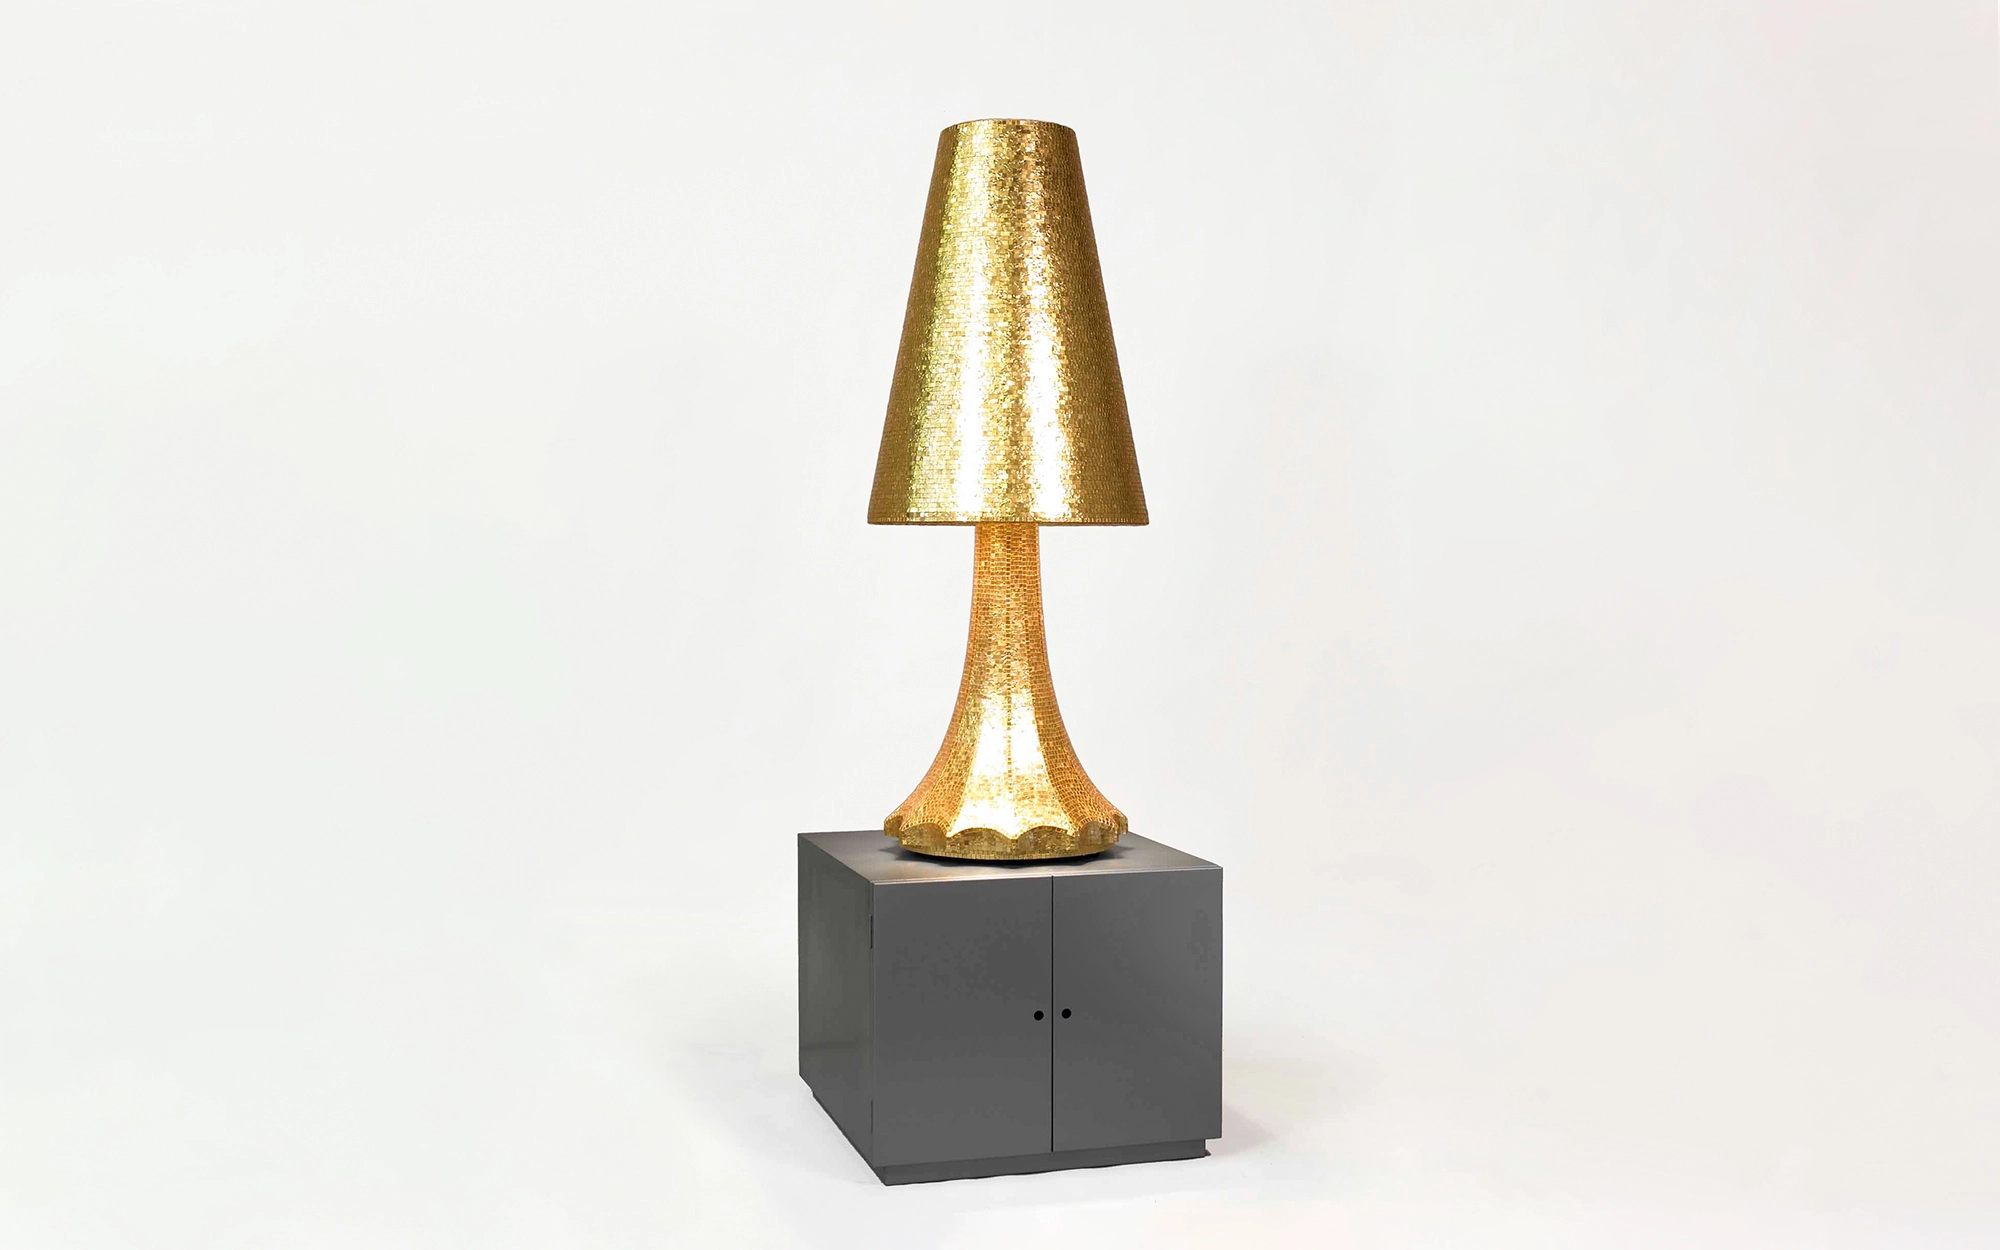 Lampada yellow gold - Alessandro Mendini - Table - Galerie kreo